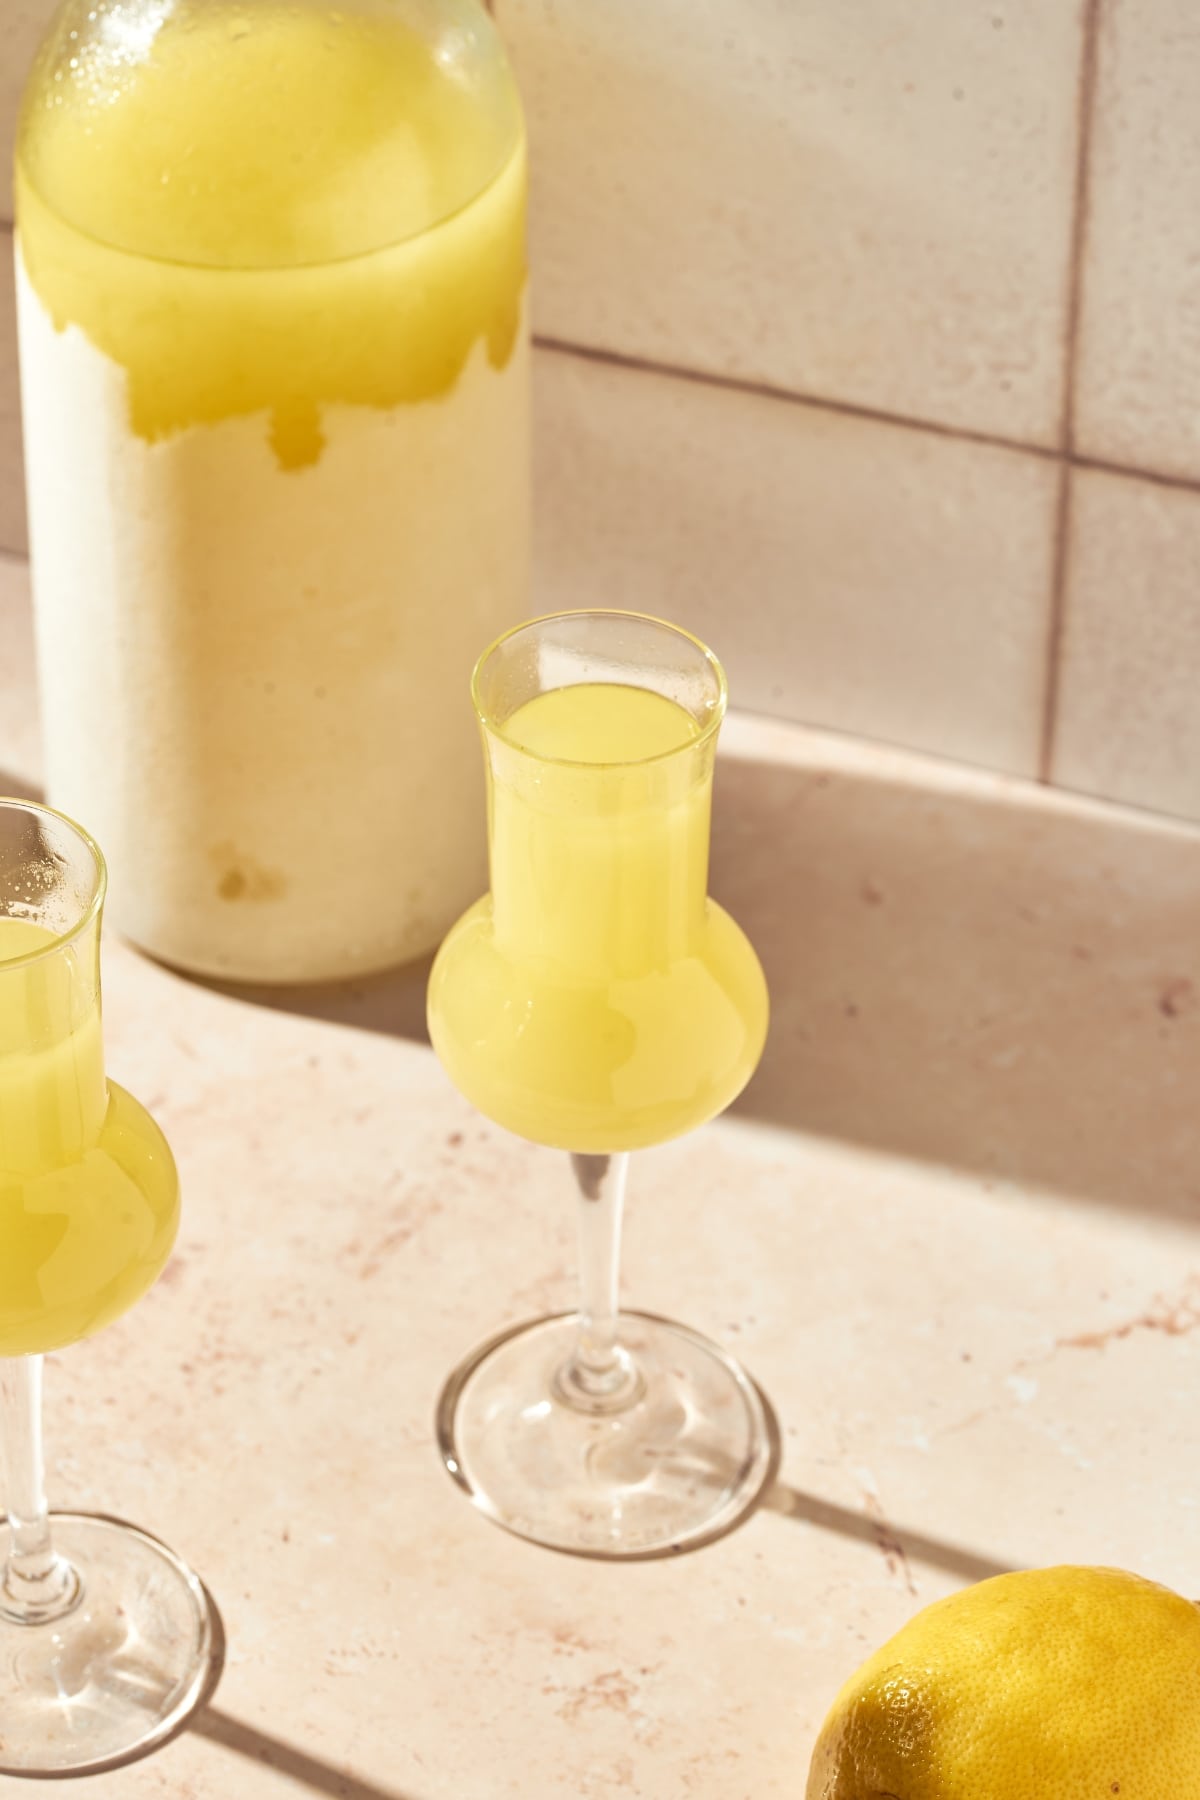 Two glasses of homemade limoncello next to a lemon.